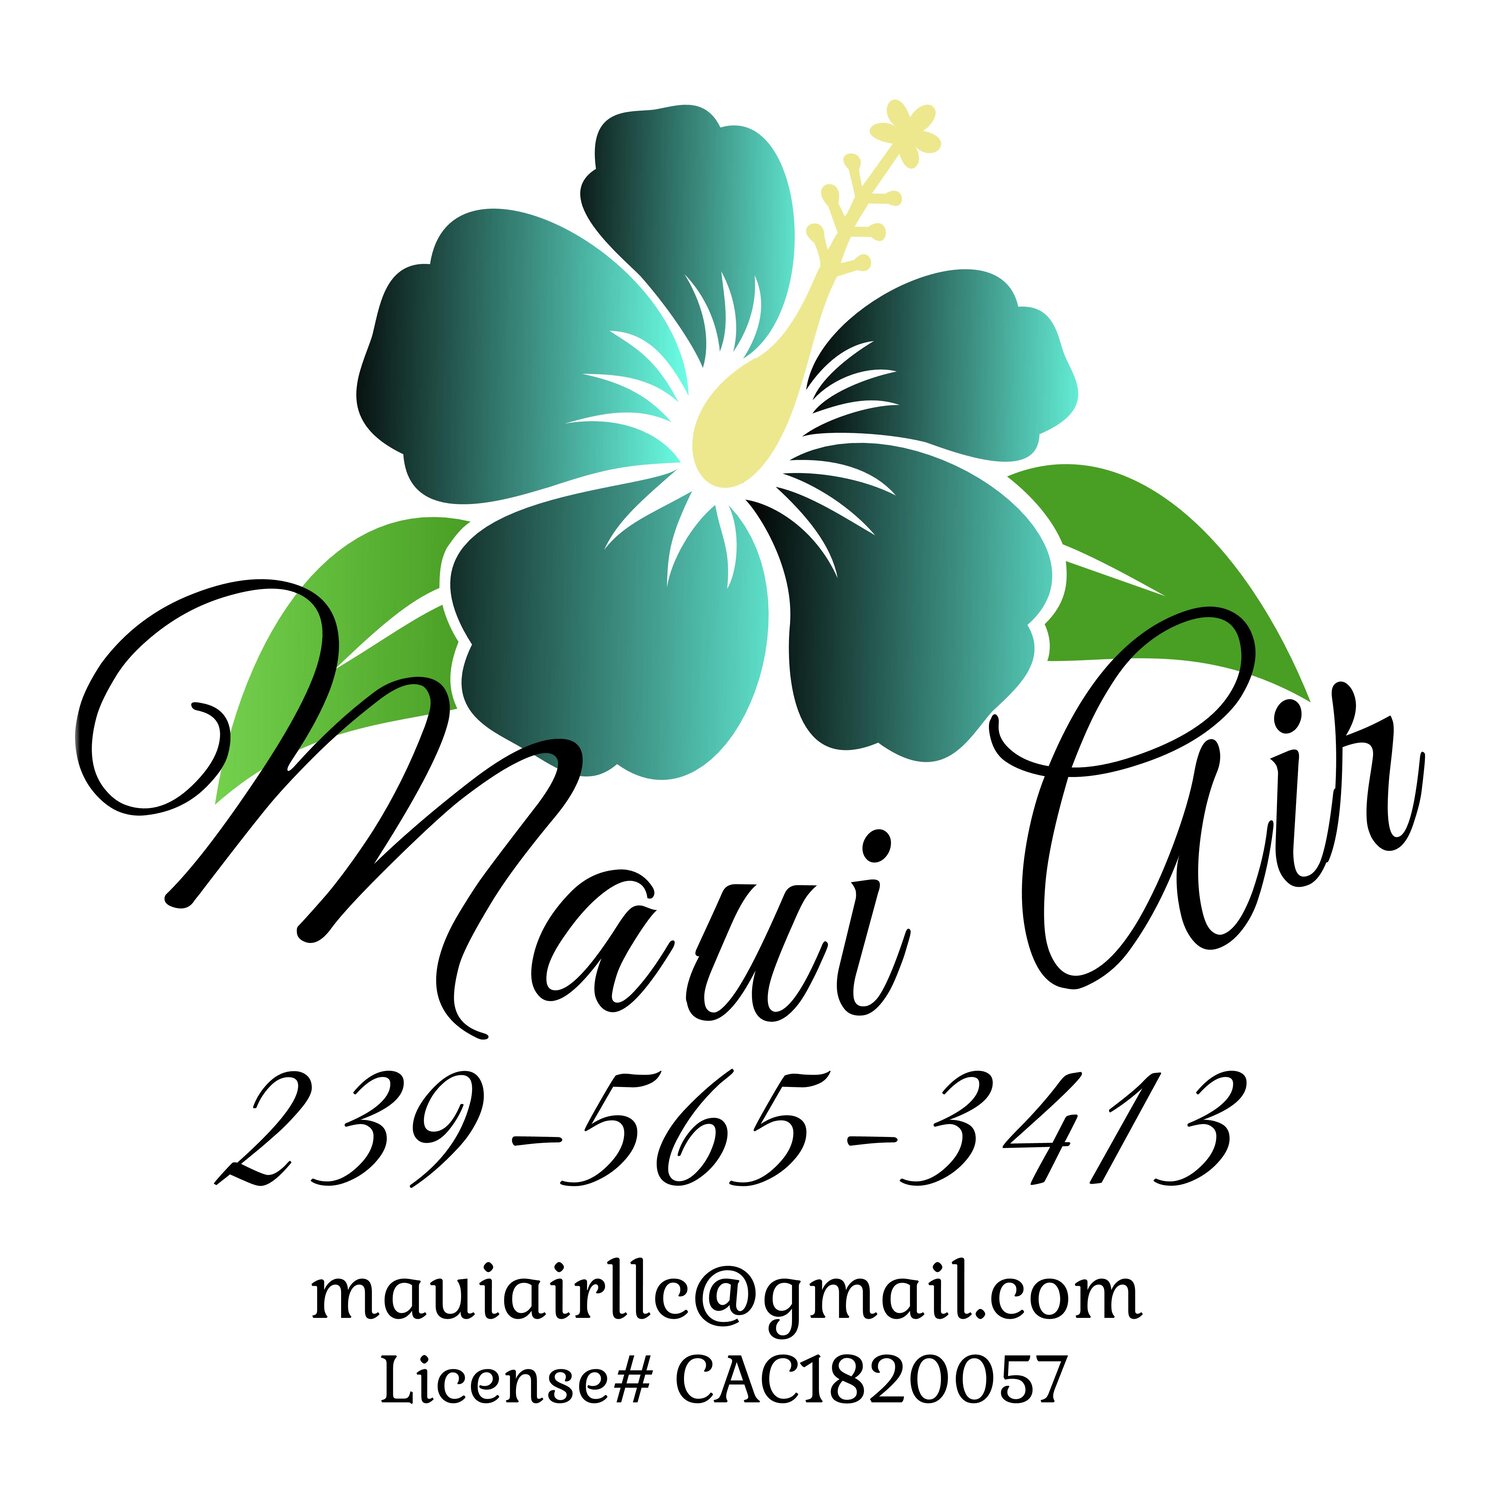 Maui Air LLC